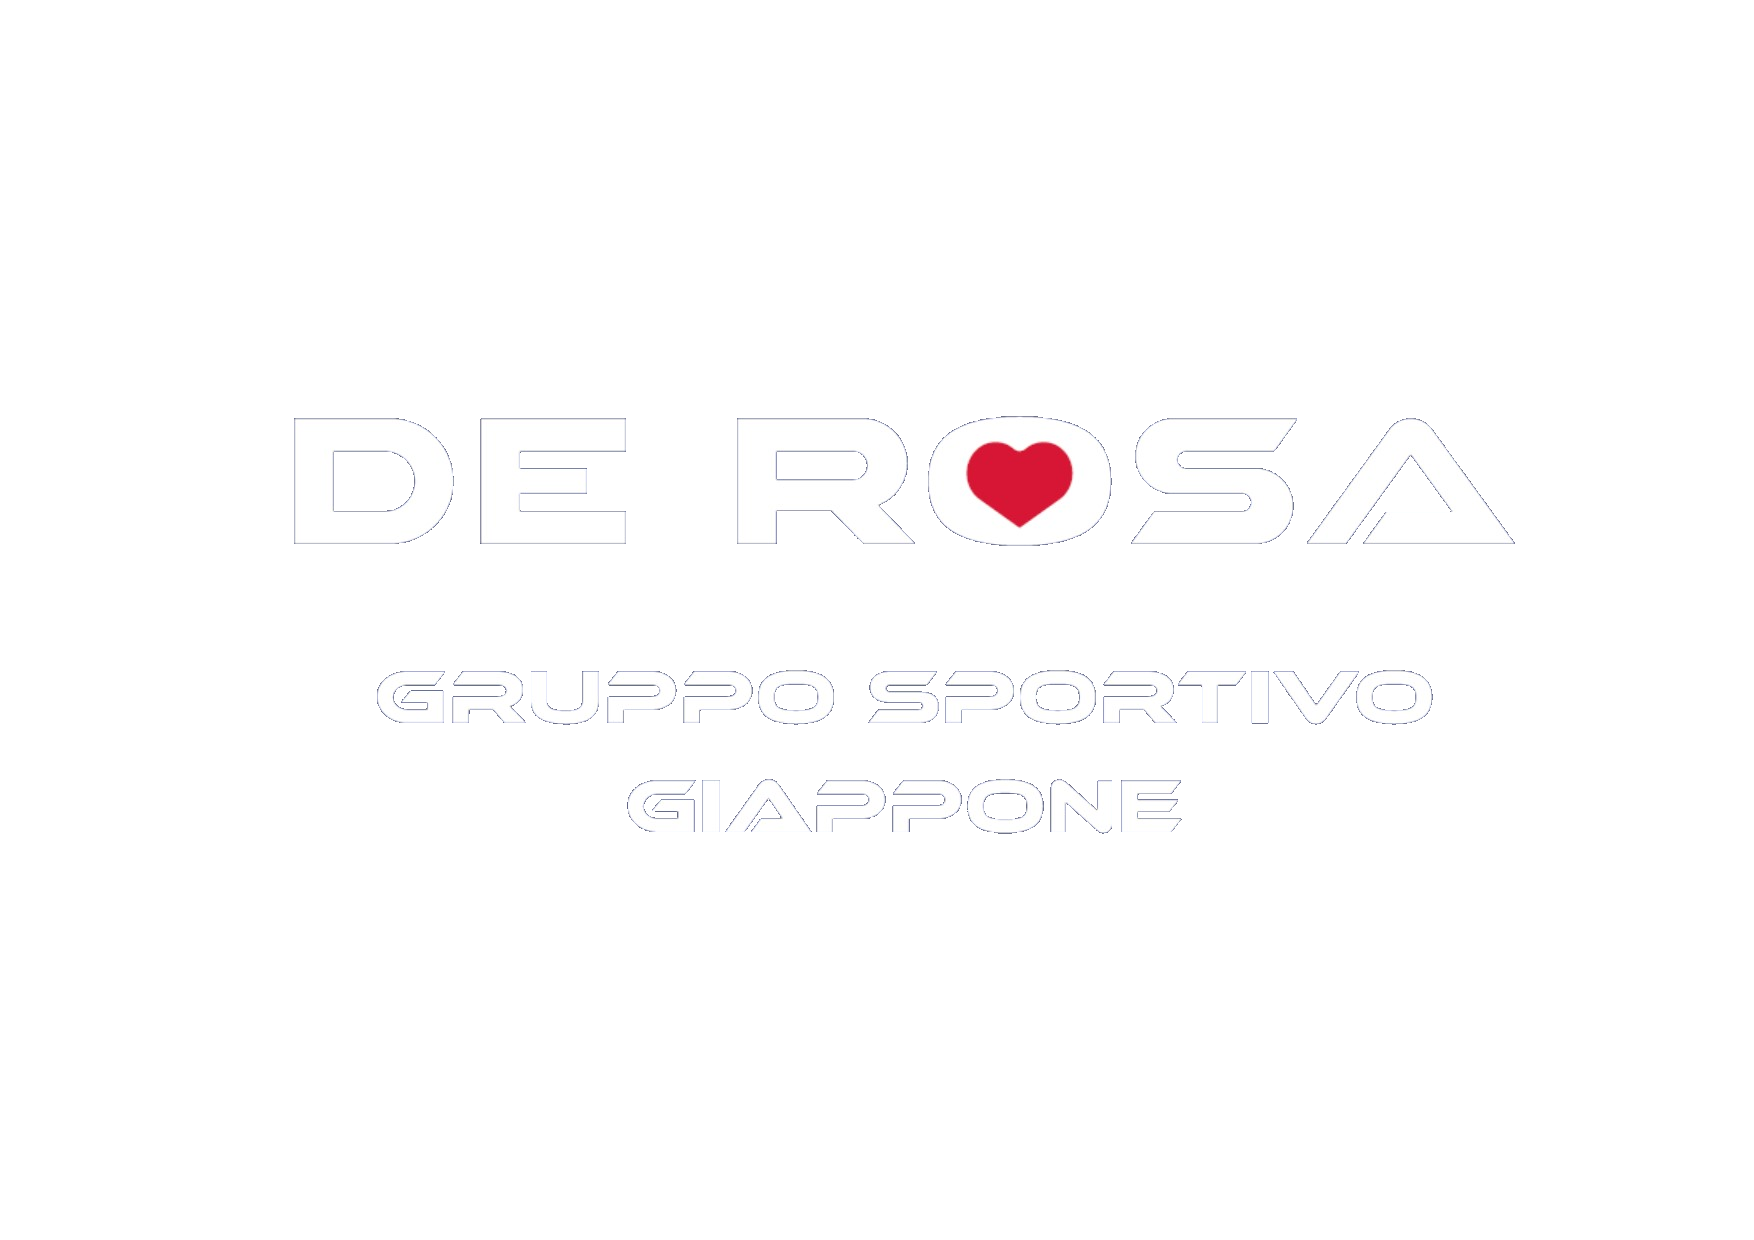 DE ROSAオーナーズクラブ – Gruppo Sportivo DE ROSA | DE ROSA JAPAN